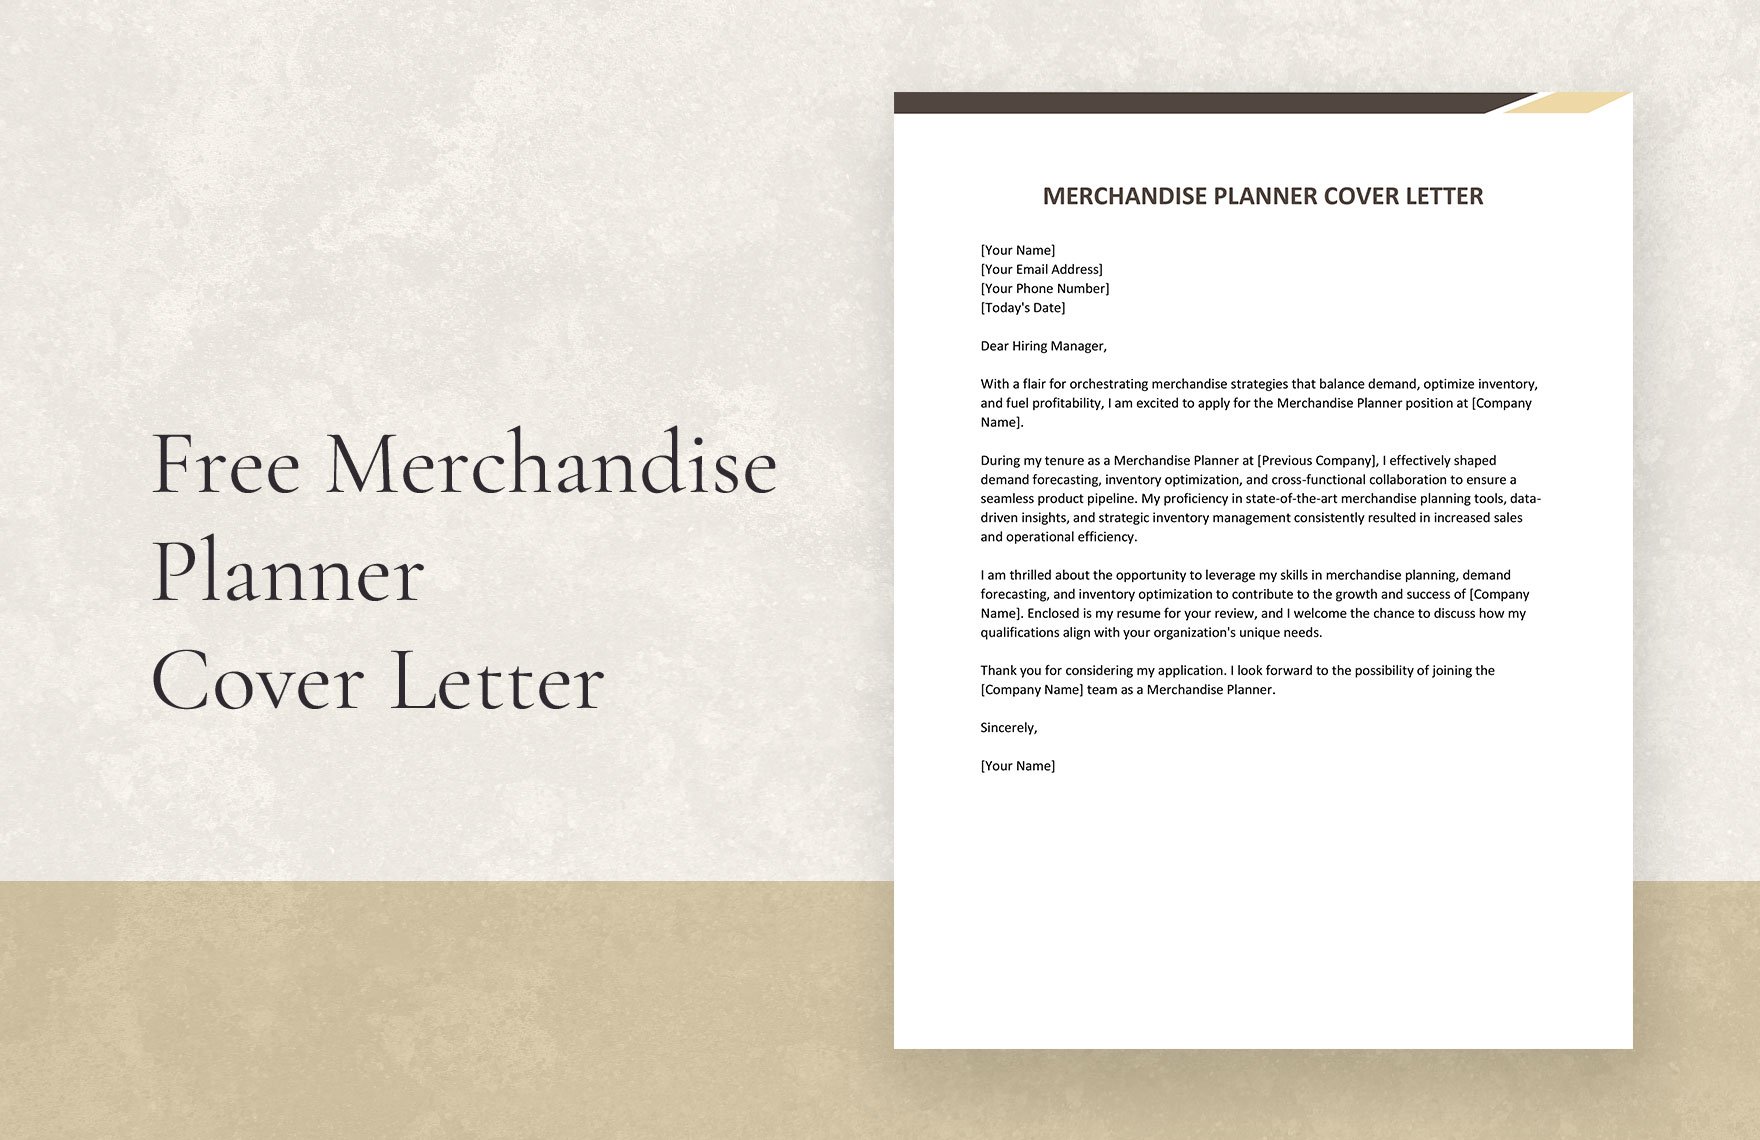 Merchandise Planner Cover Letter in Word, Google Docs